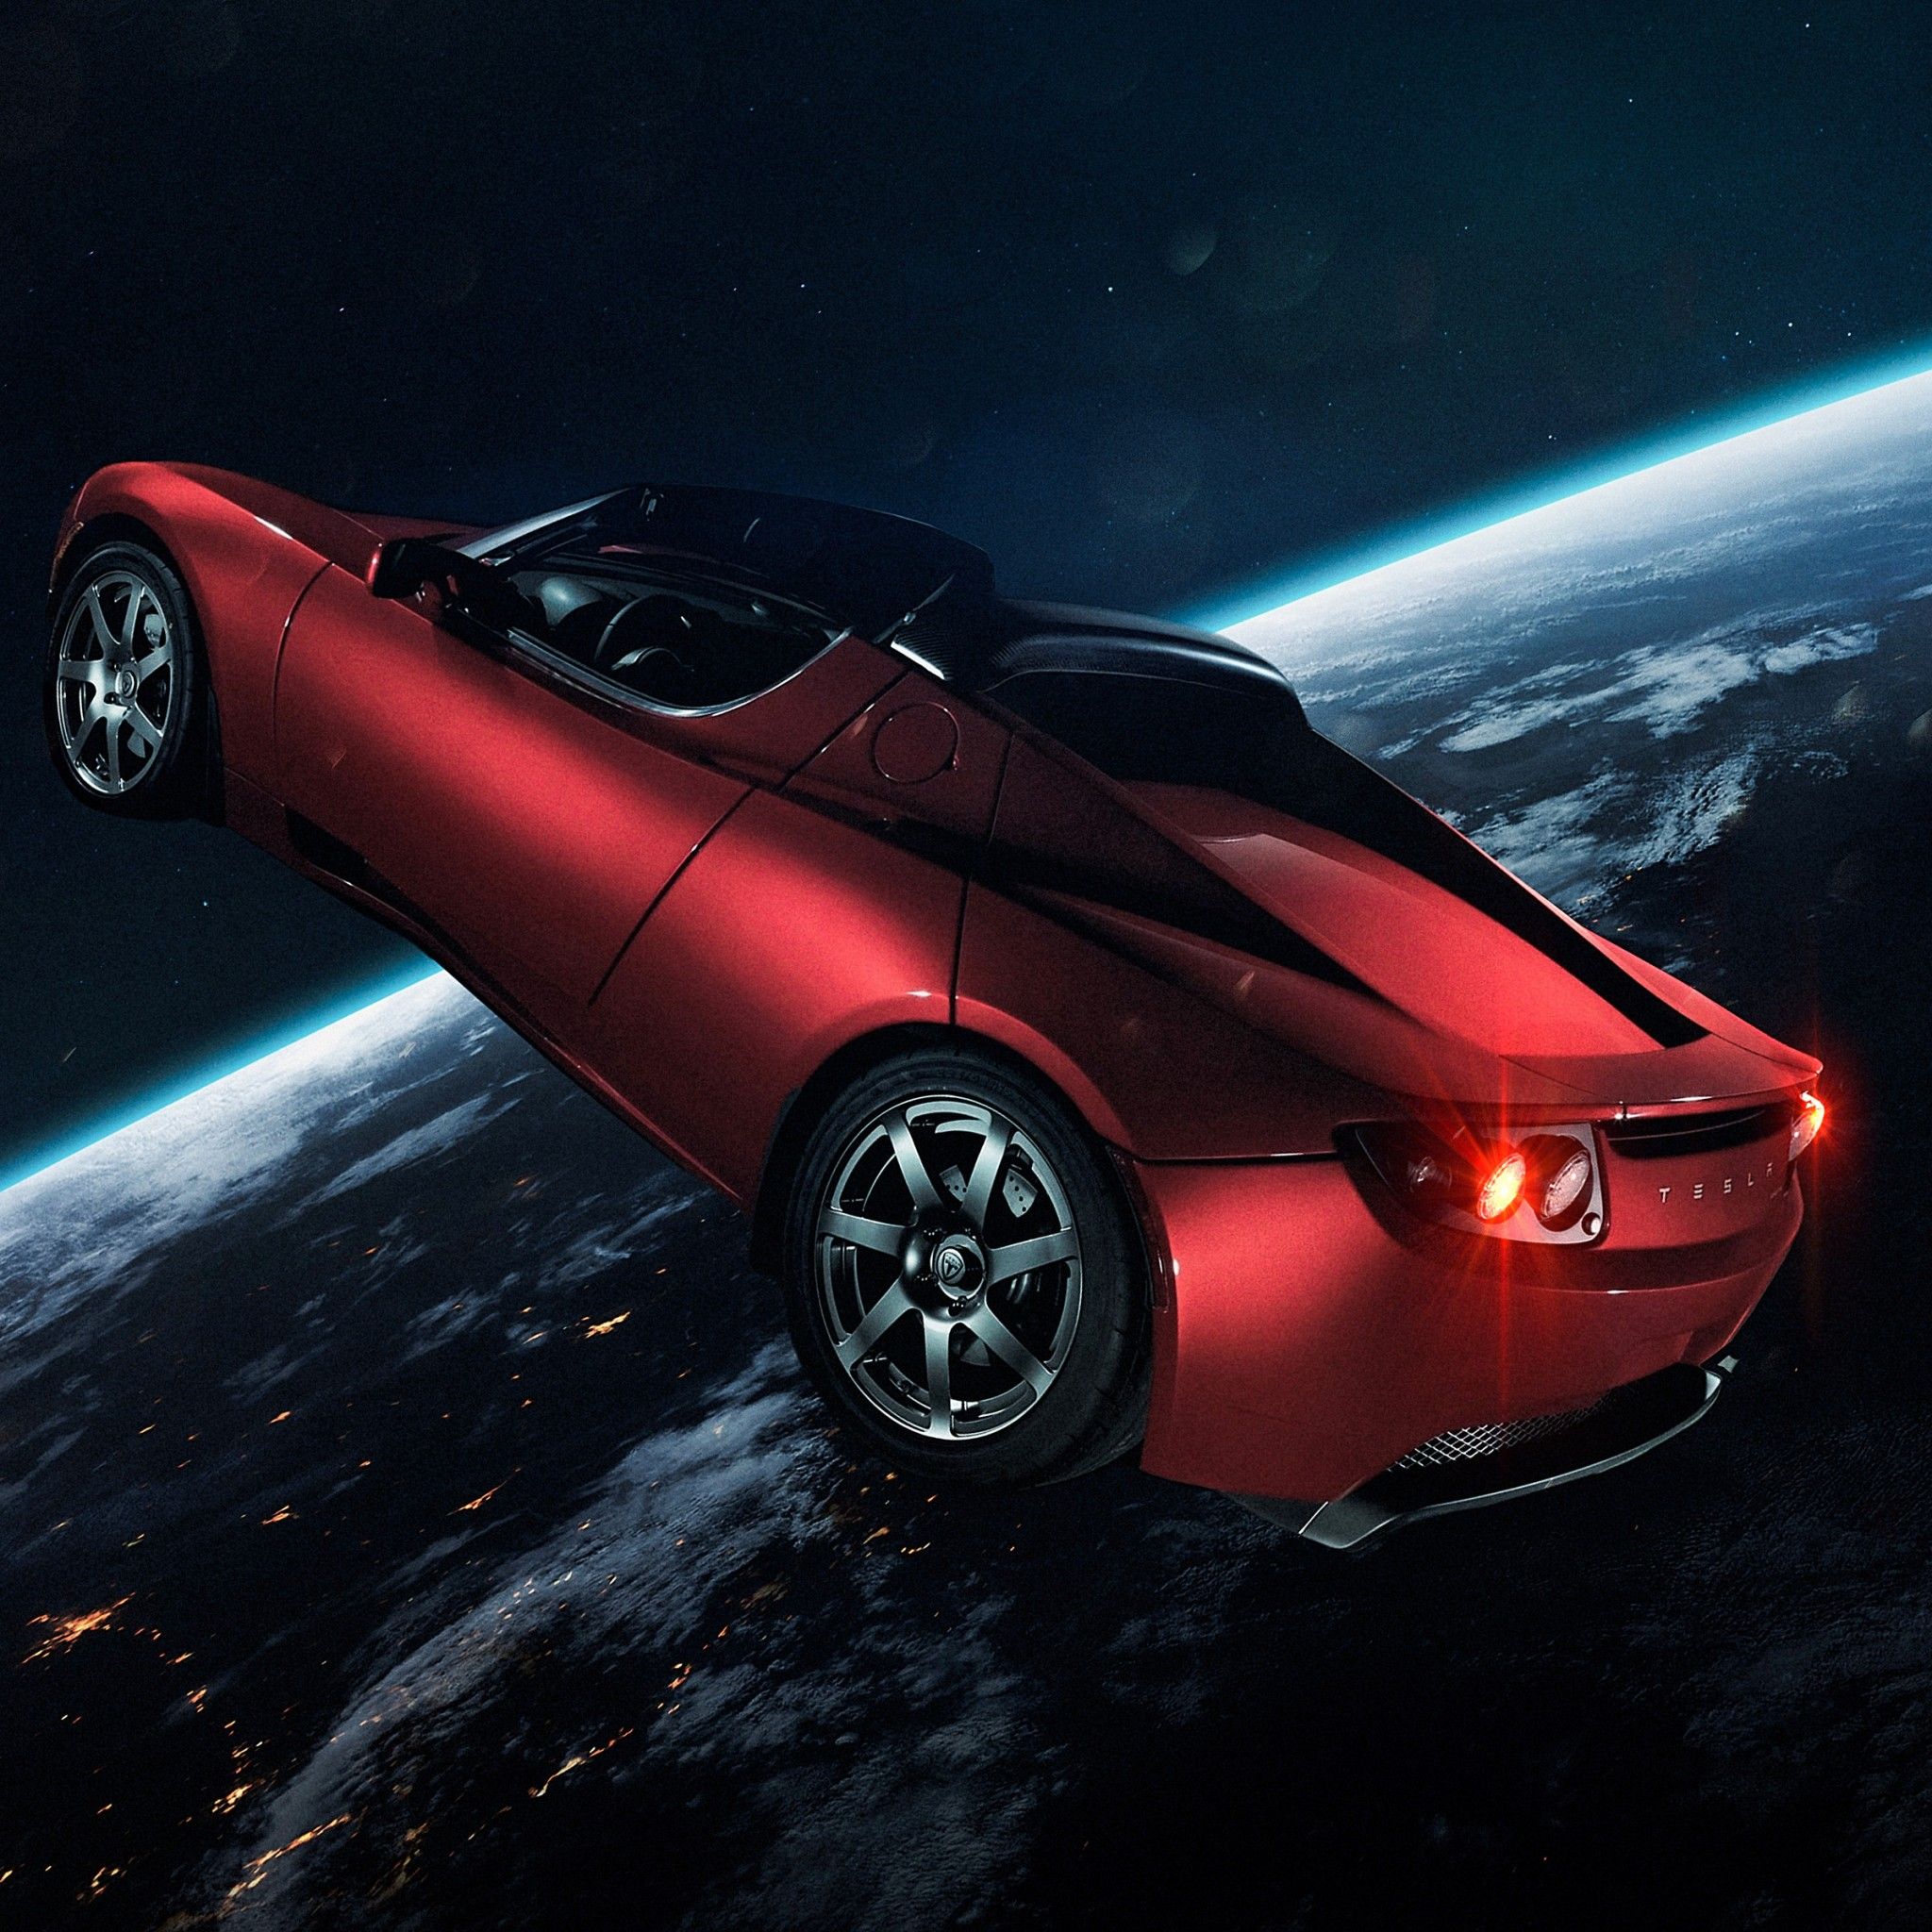 Elon Musk's Tesla Roadster 4K Wallpaper, Tesla in Space, Red Car, Earth, Horizon, Electric Sports cars, Space